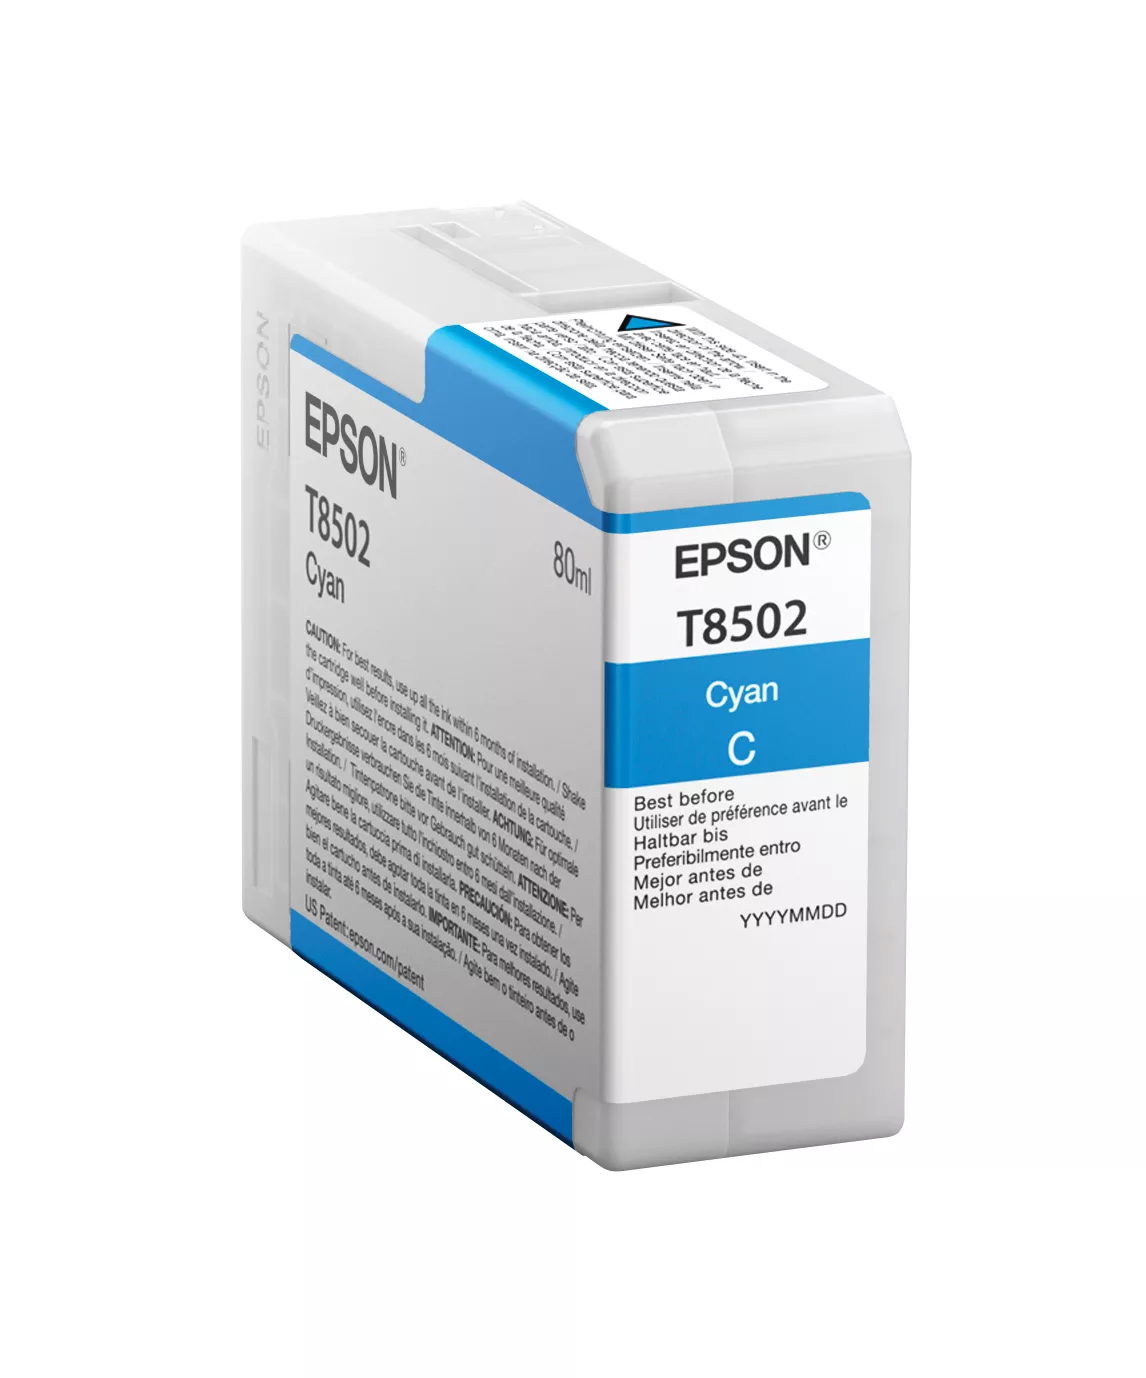 Achat EPSON Singlepack Cyan T850200 UltraChrome HD ink 80ml au meilleur prix